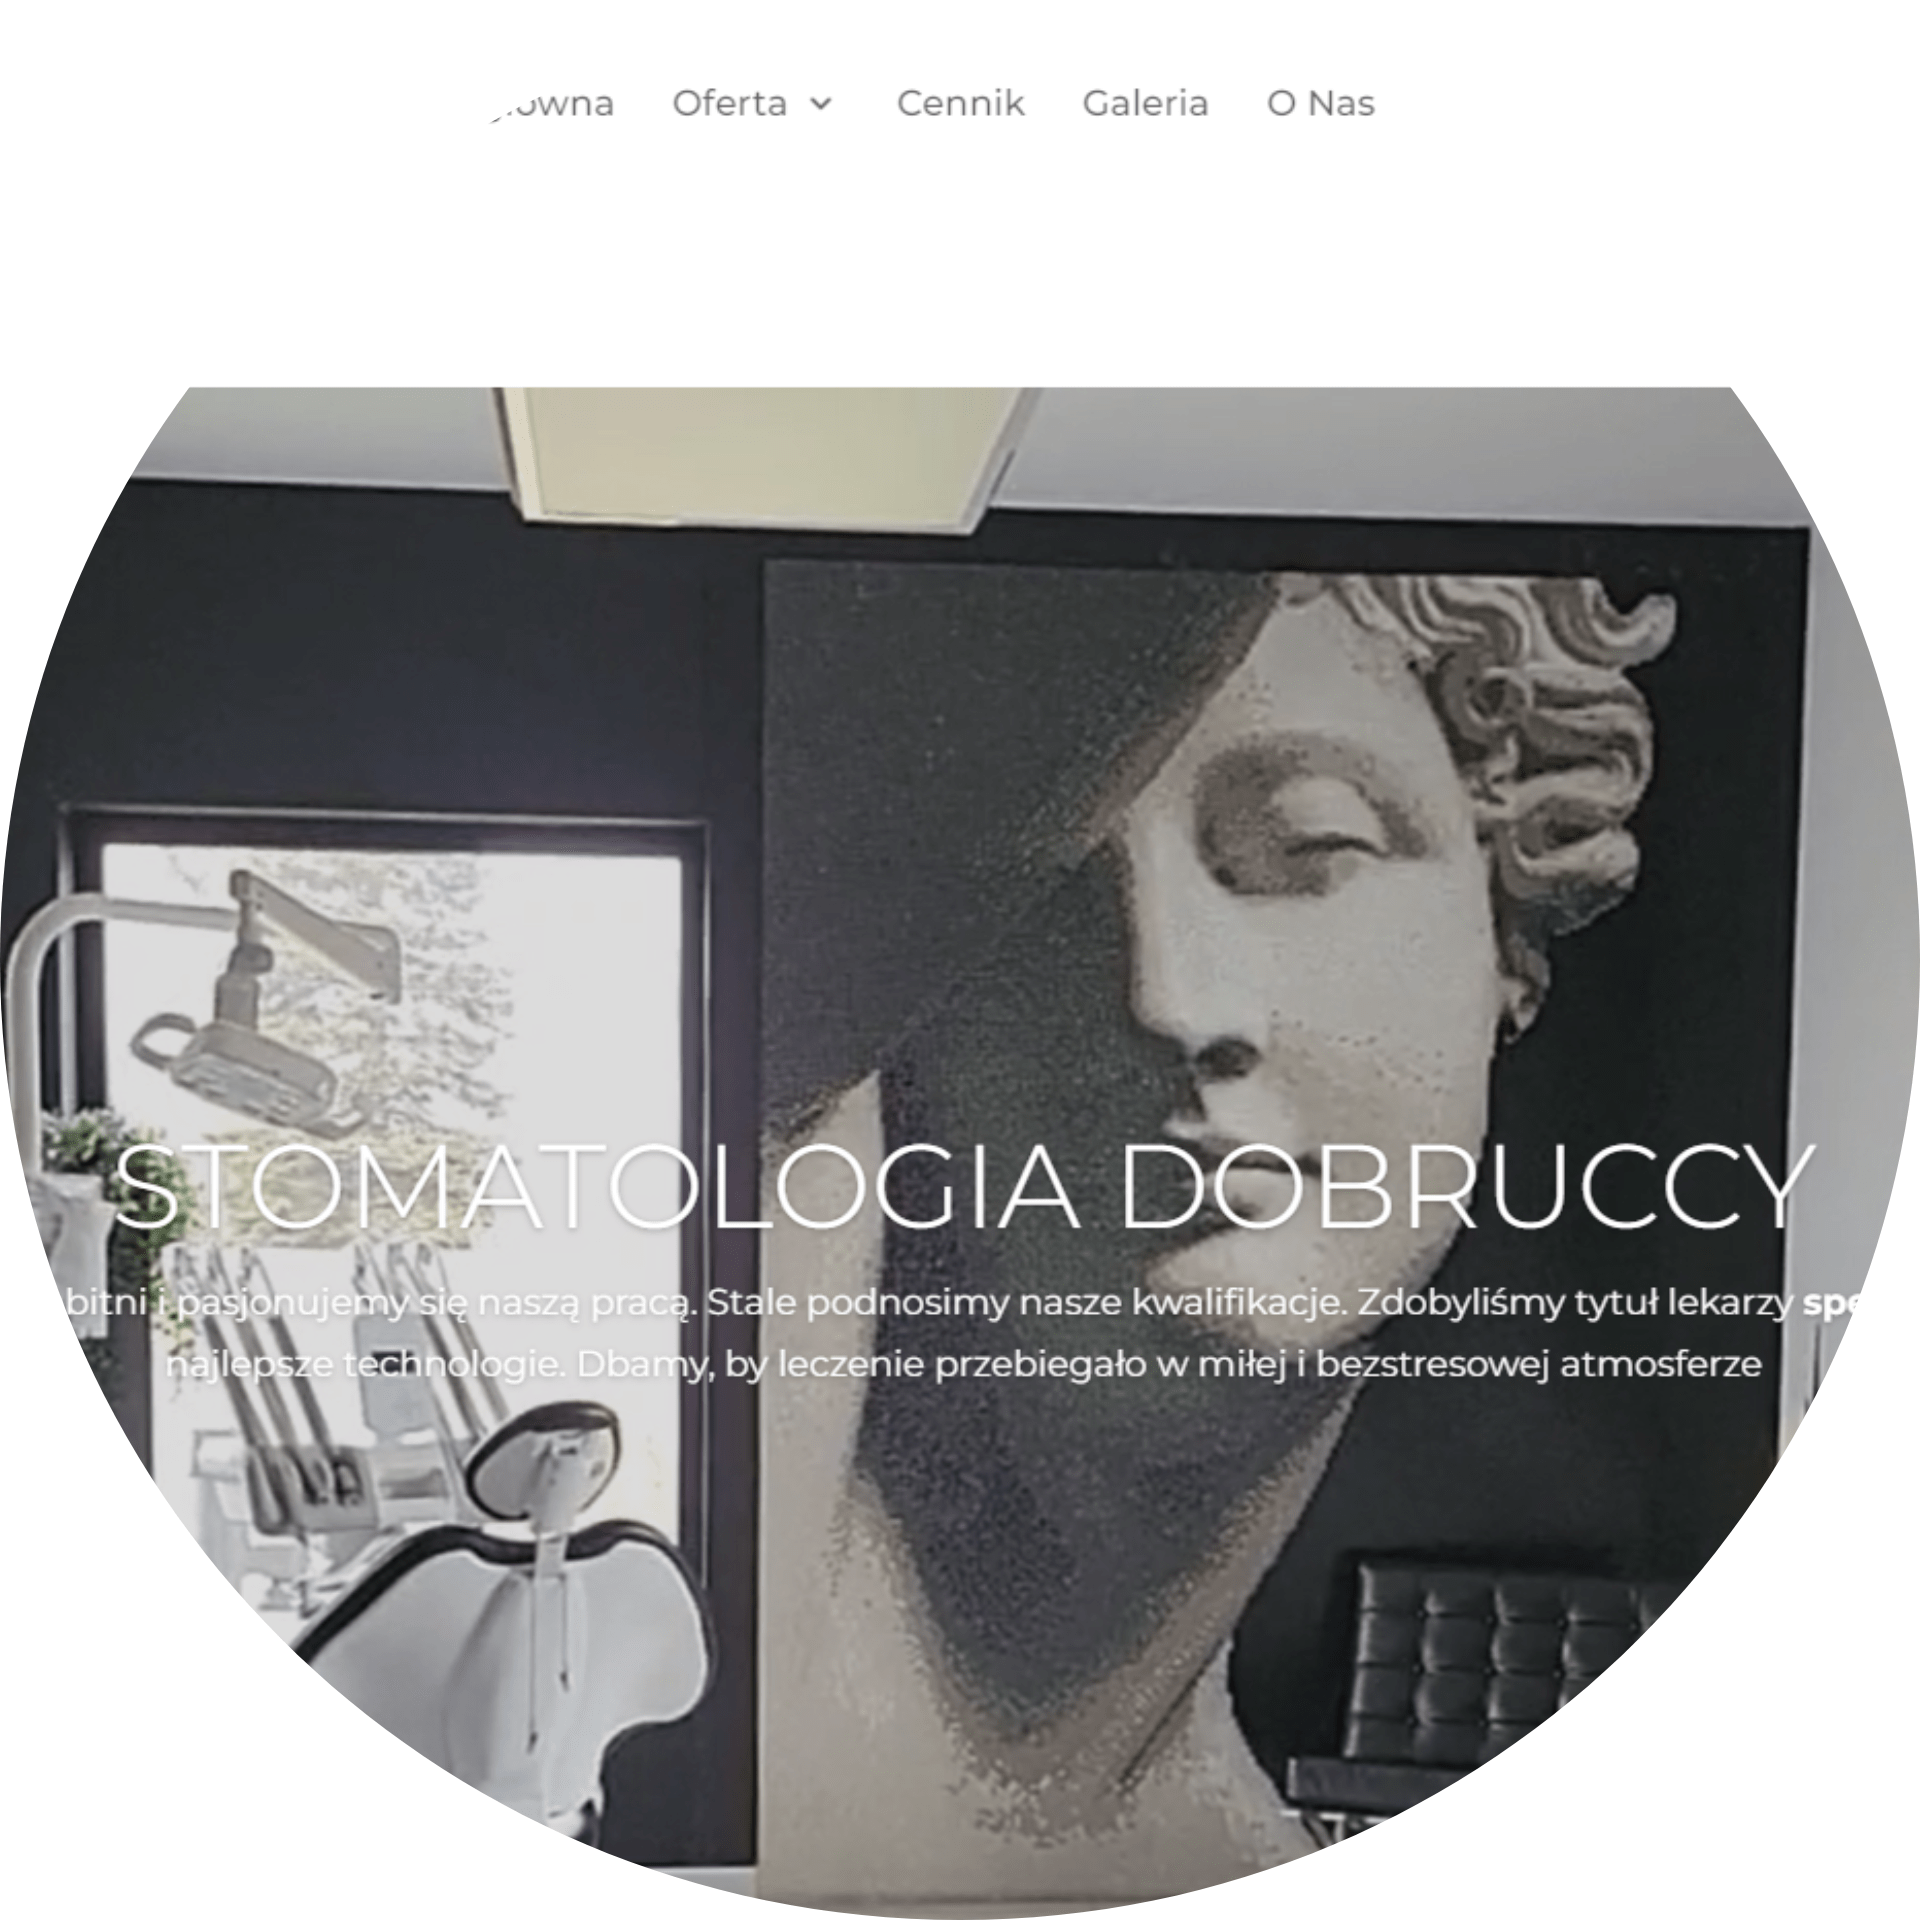 KK Digital strona portfolio Stomatologia Dobruccy